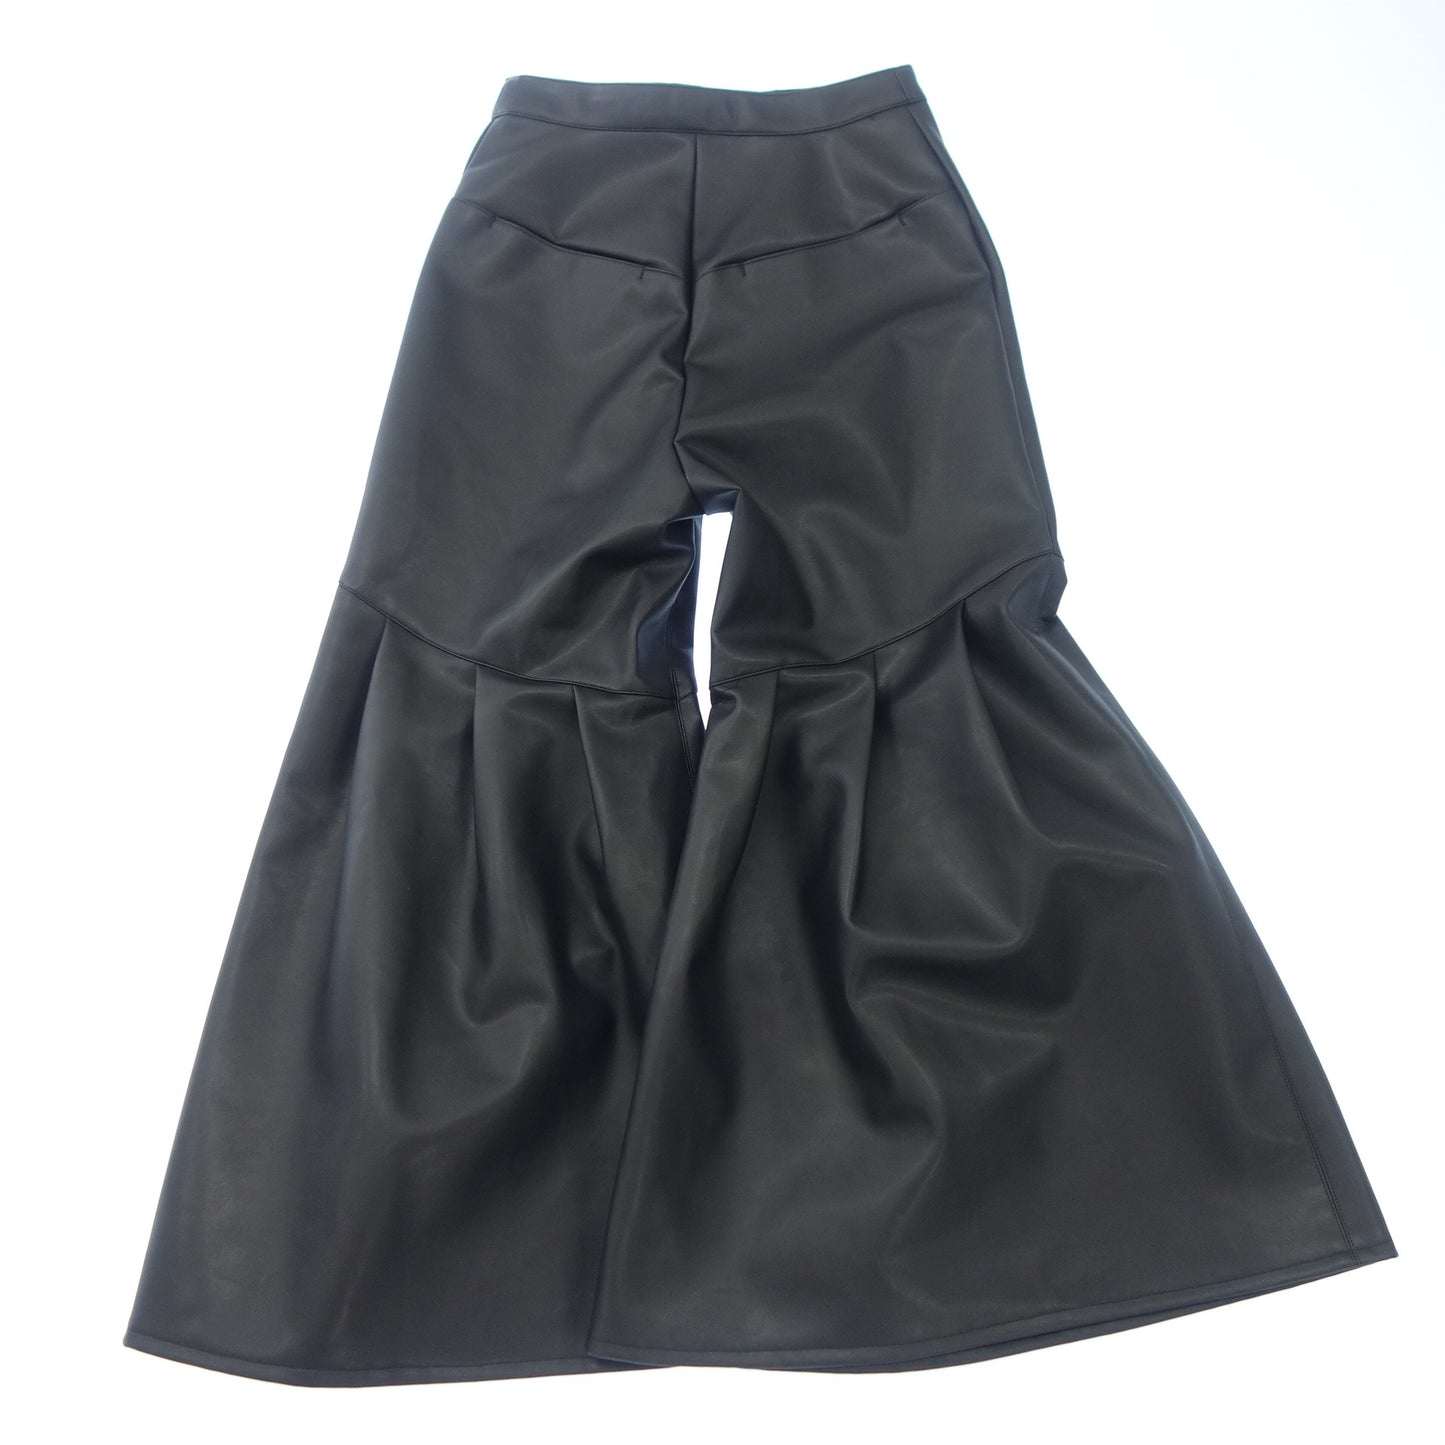 Very good condition ◆ Lautashi Pants Flare Faux Leather Women's Black 1 Lautashi [AFG1] 